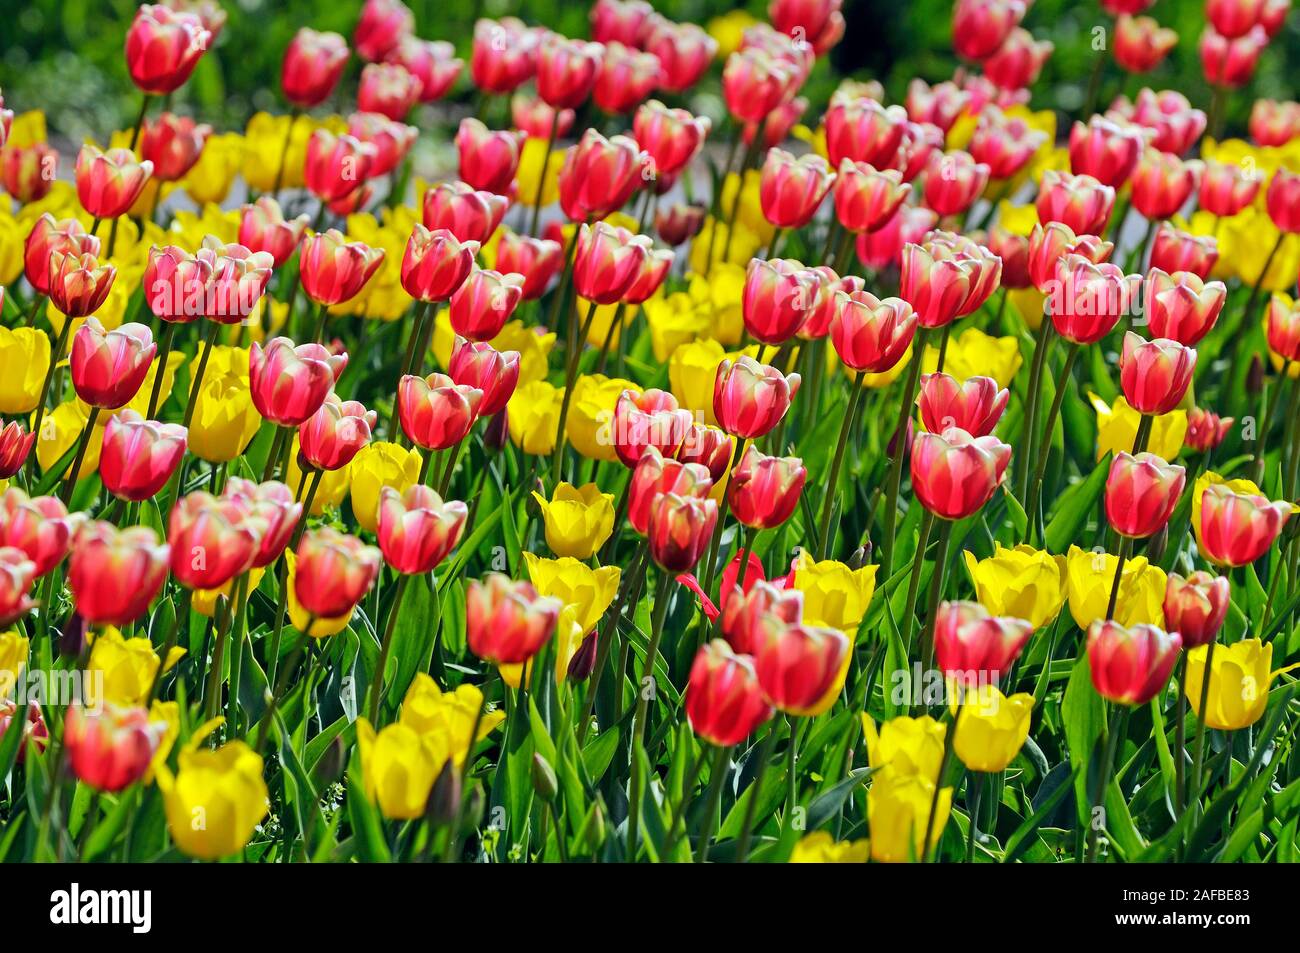 Rote und gelbe Tulpen, Tulipa spp. - Tulpenfeld Banque D'Images